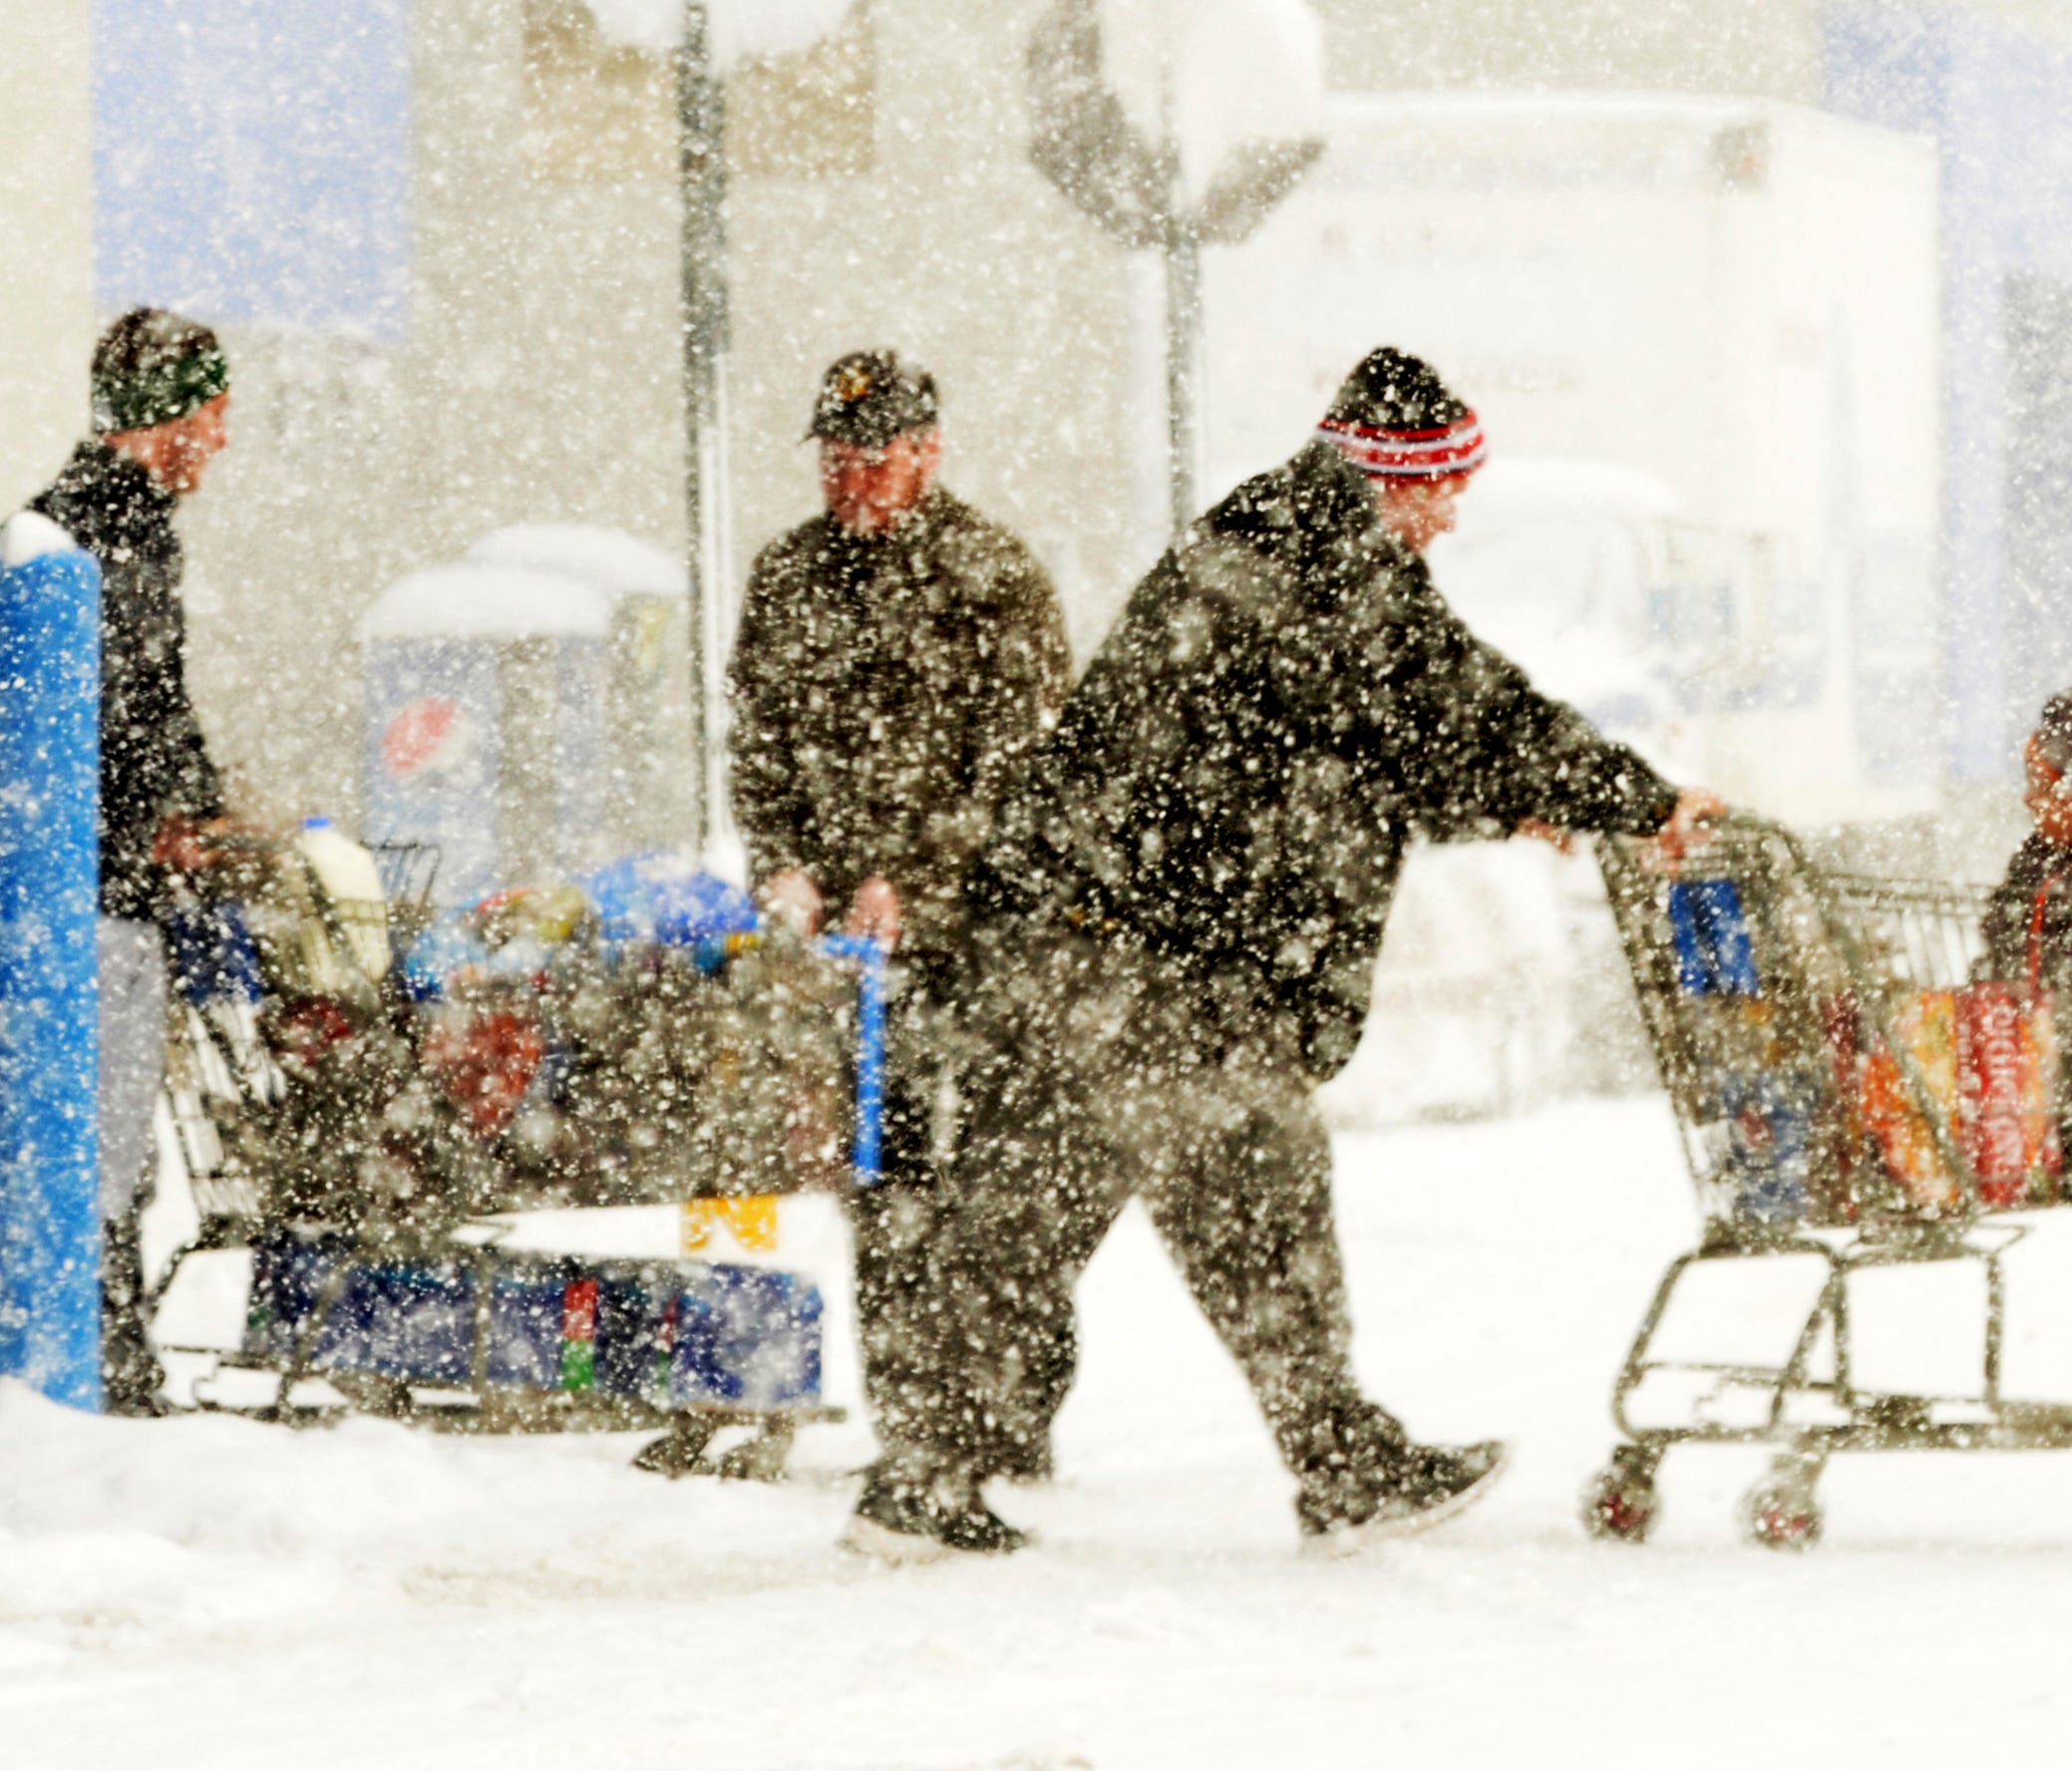 Shoppers brave the snow at Walmart in Ashtabula Township, Ohio, on Tuesday, Dec. 26, 2017.